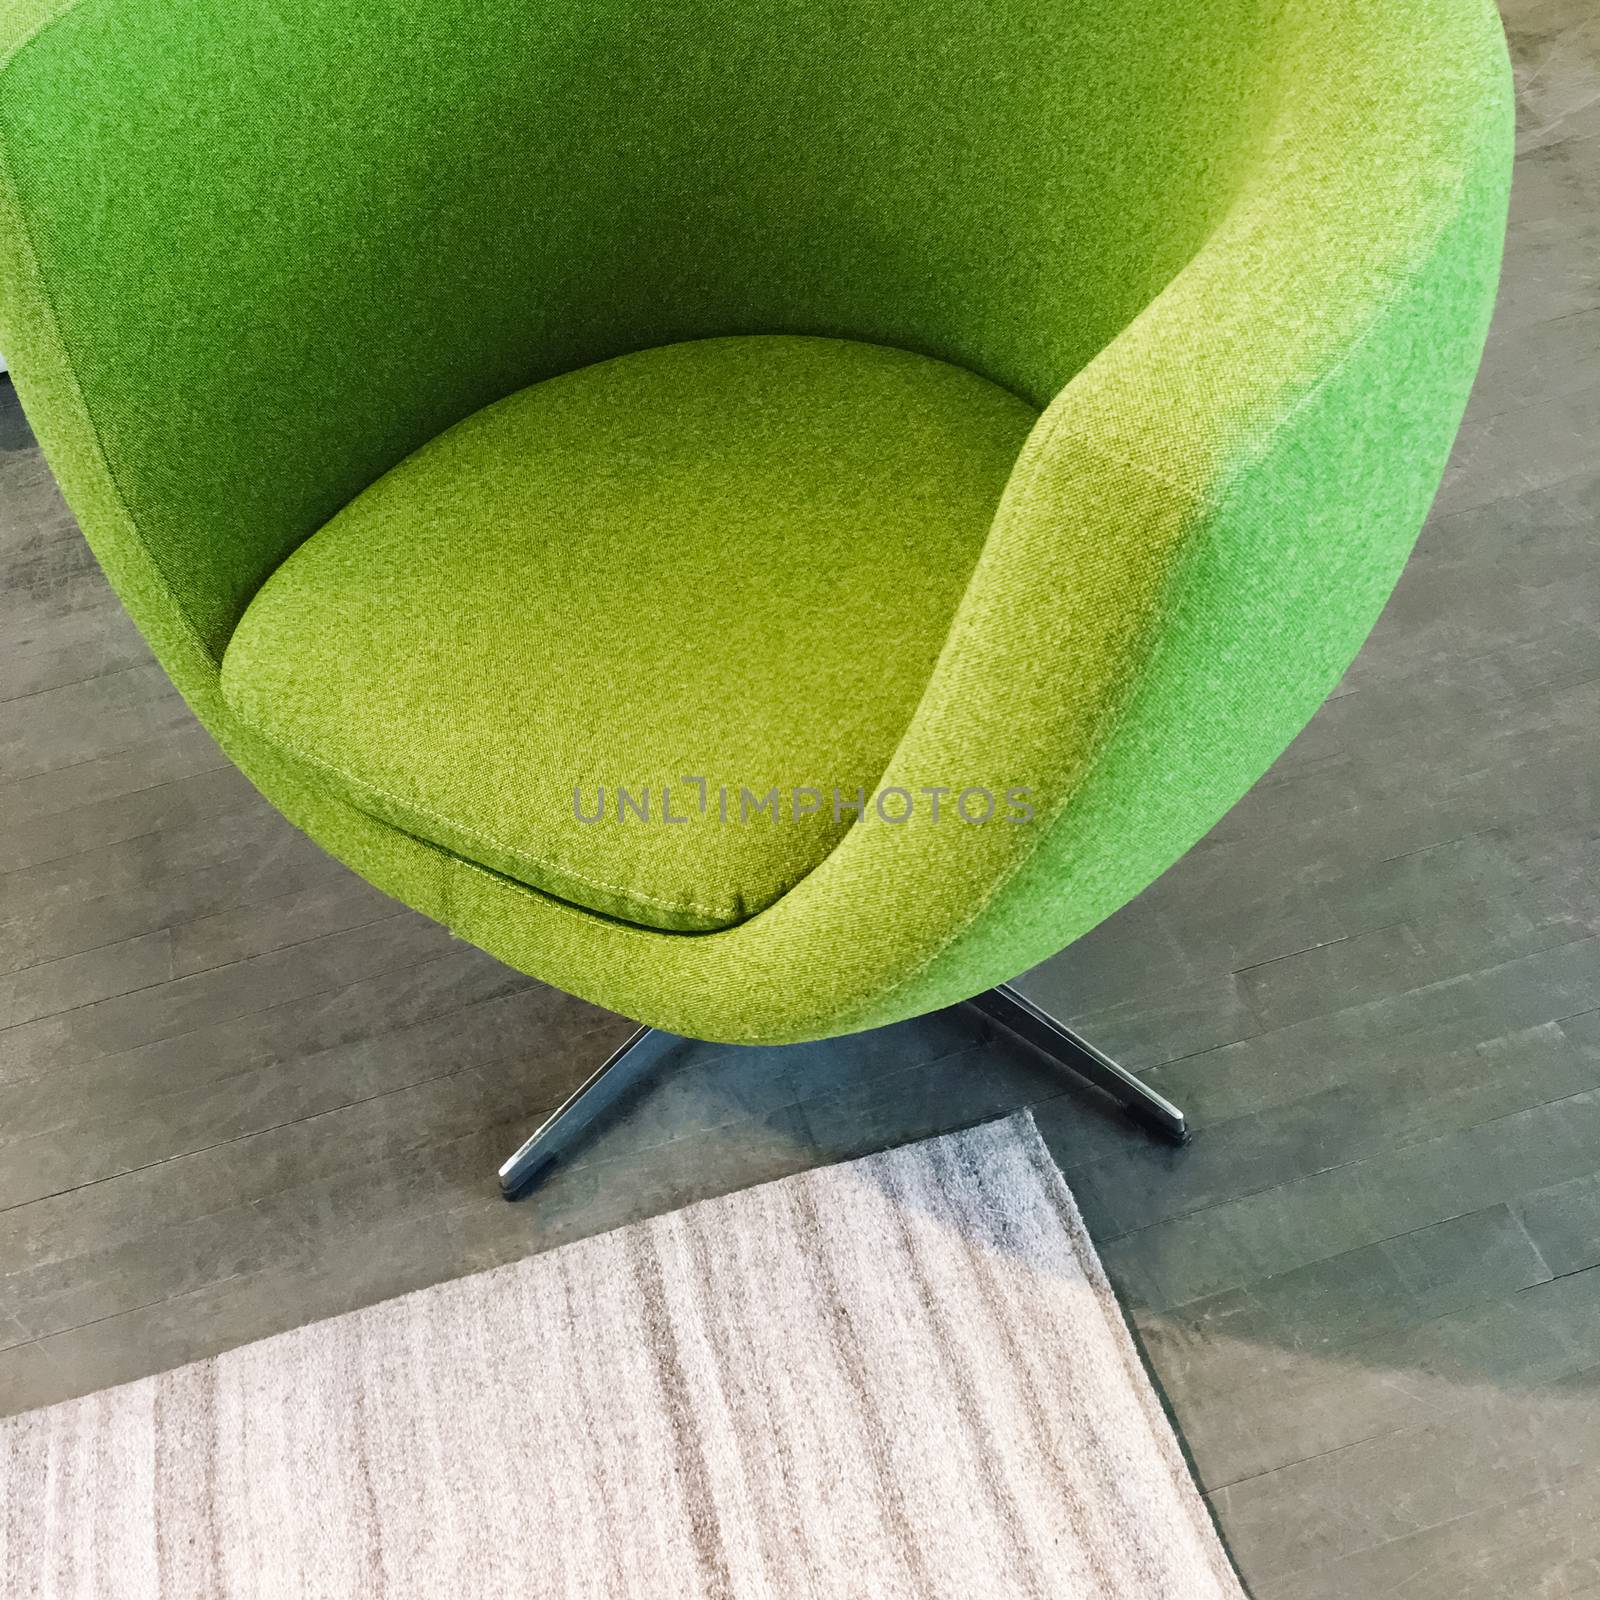 Trendy green armchair by anikasalsera